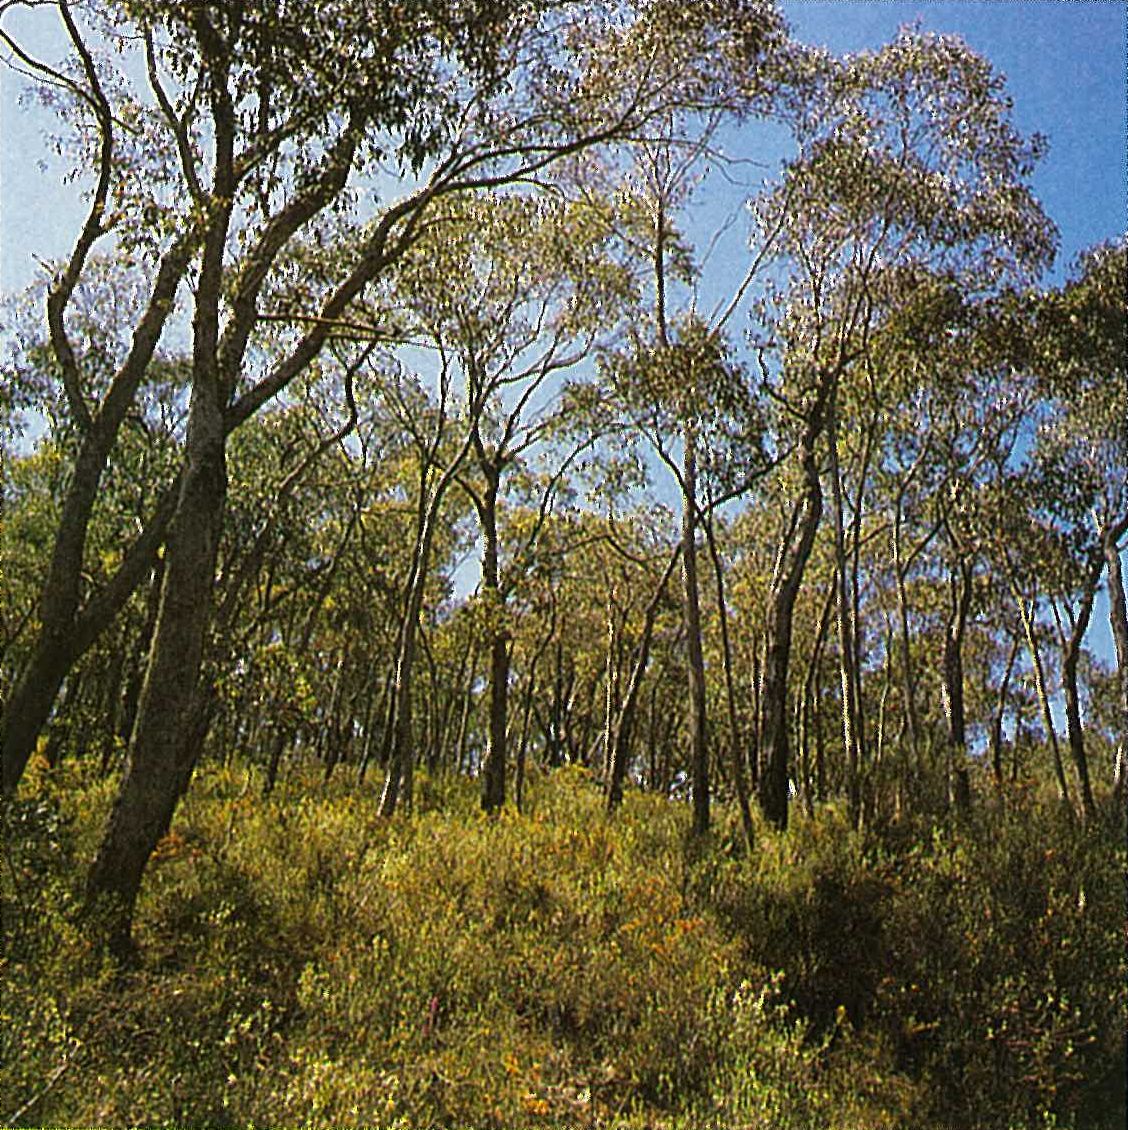 Midlands; dry open-forest. Eucalyptus macrorhyncha and E. polyanthemos, with heathy shrub-layer, Brachyloma daphnoides, Dillwynia phylicoides and Tetratheca ciliata. Near Alexandra.